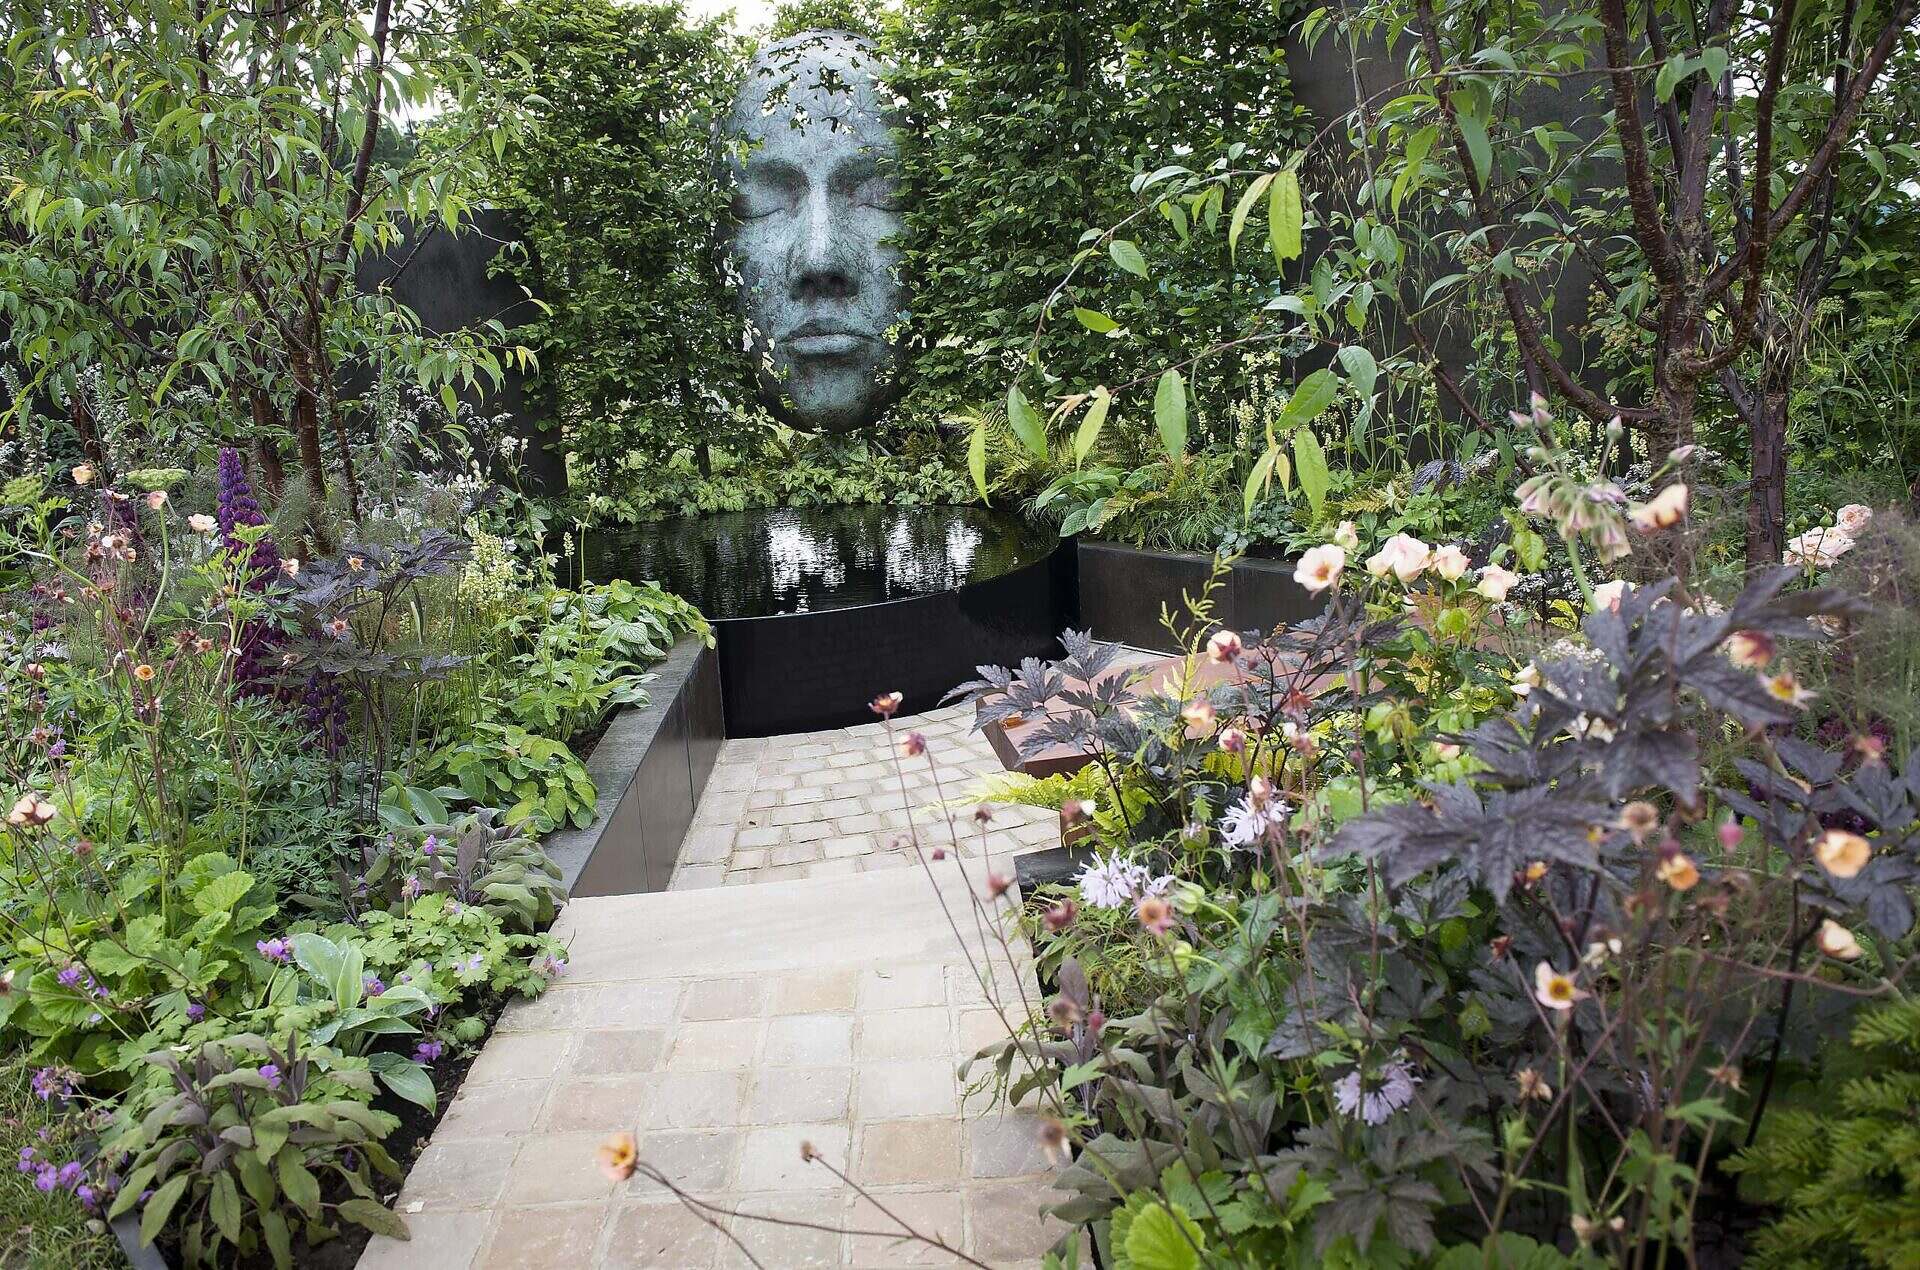 Show garden at RHS Chatsworth showing sculpture